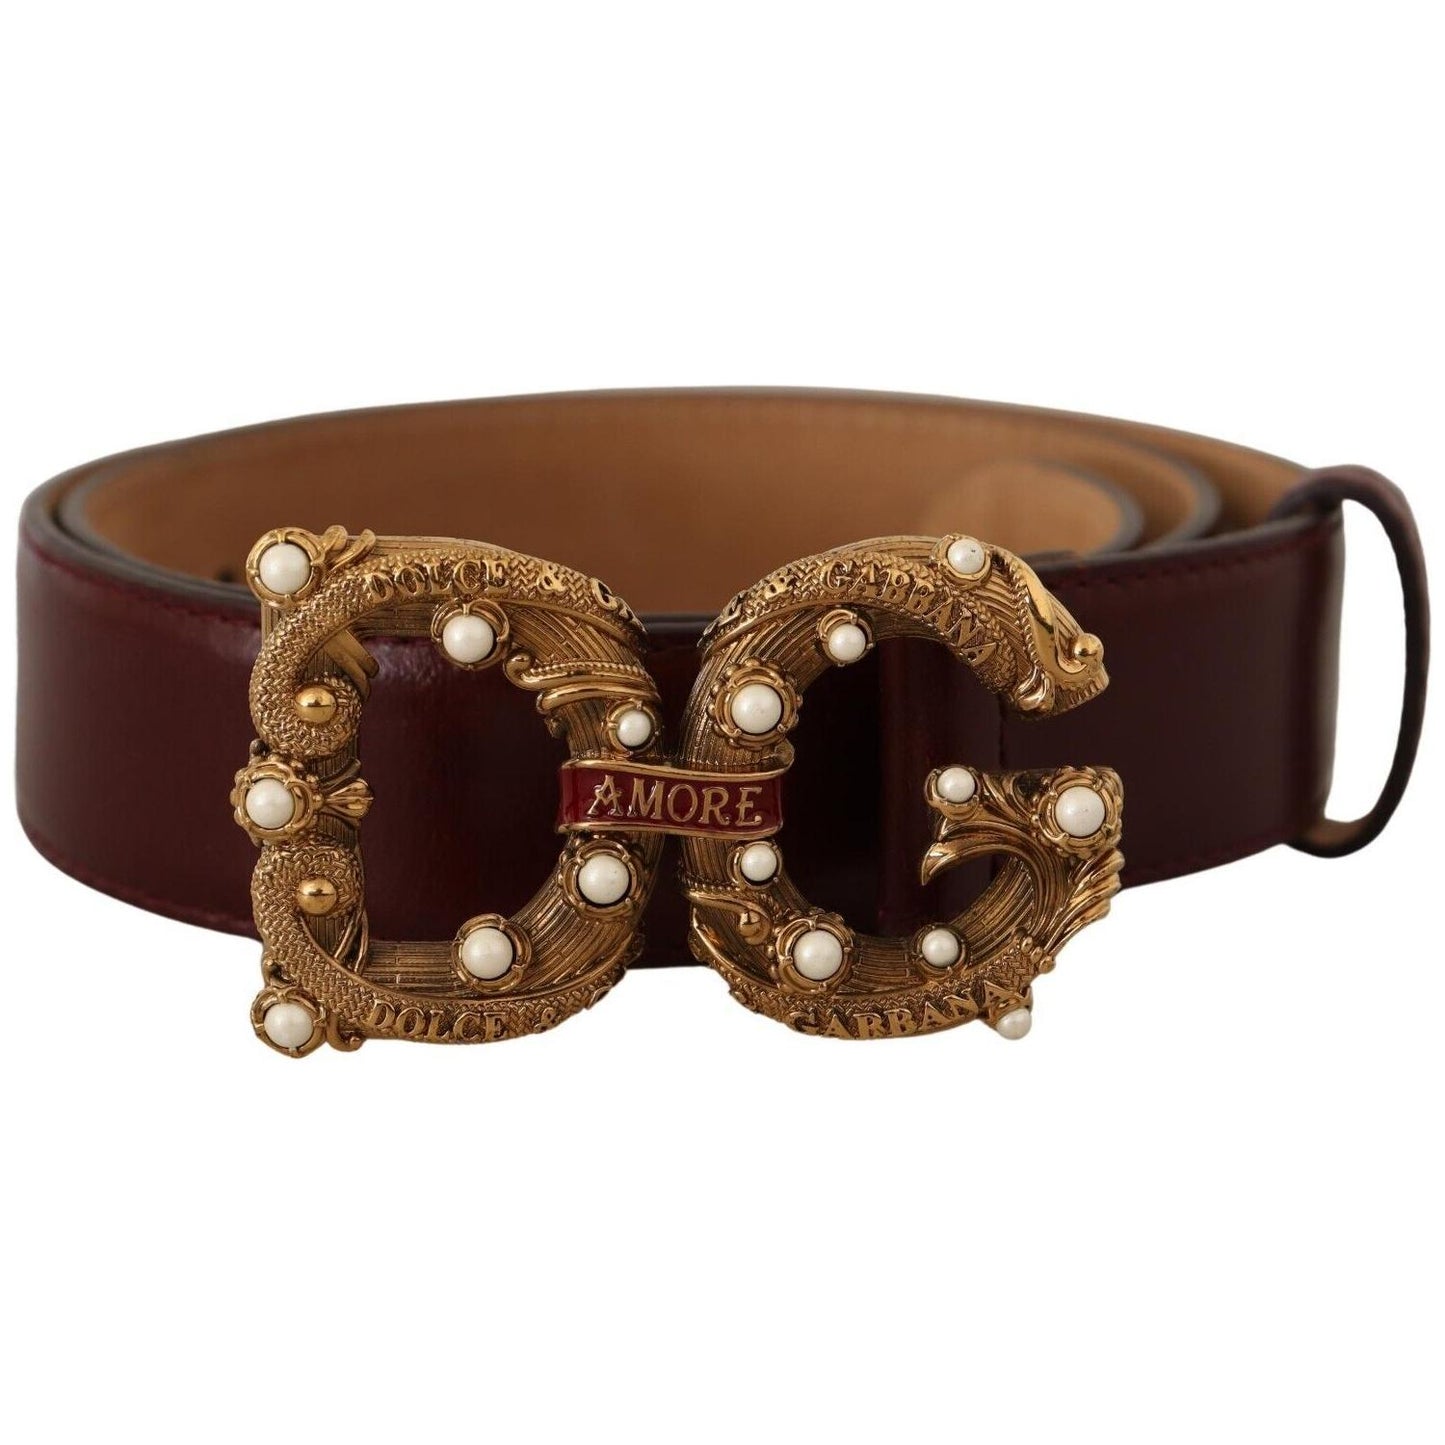 Dolce & Gabbana Elegant Bordeaux Leather Amore Belt bordeaux-leather-brass-logo-buckle-baroque-amore-belt